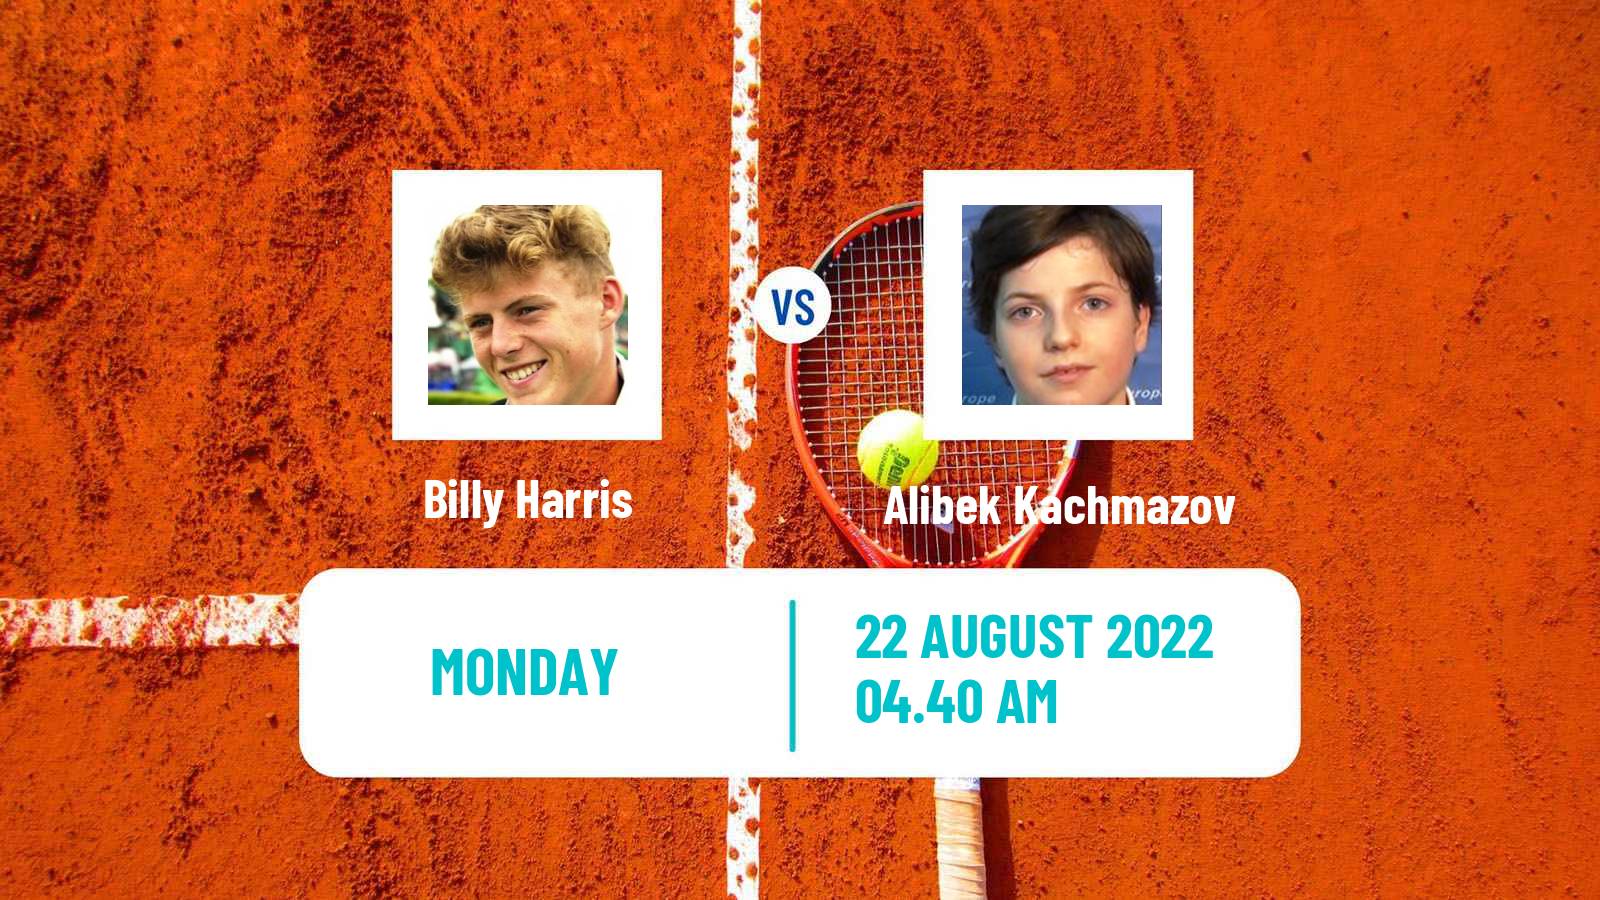 Tennis ATP Challenger Billy Harris - Alibek Kachmazov